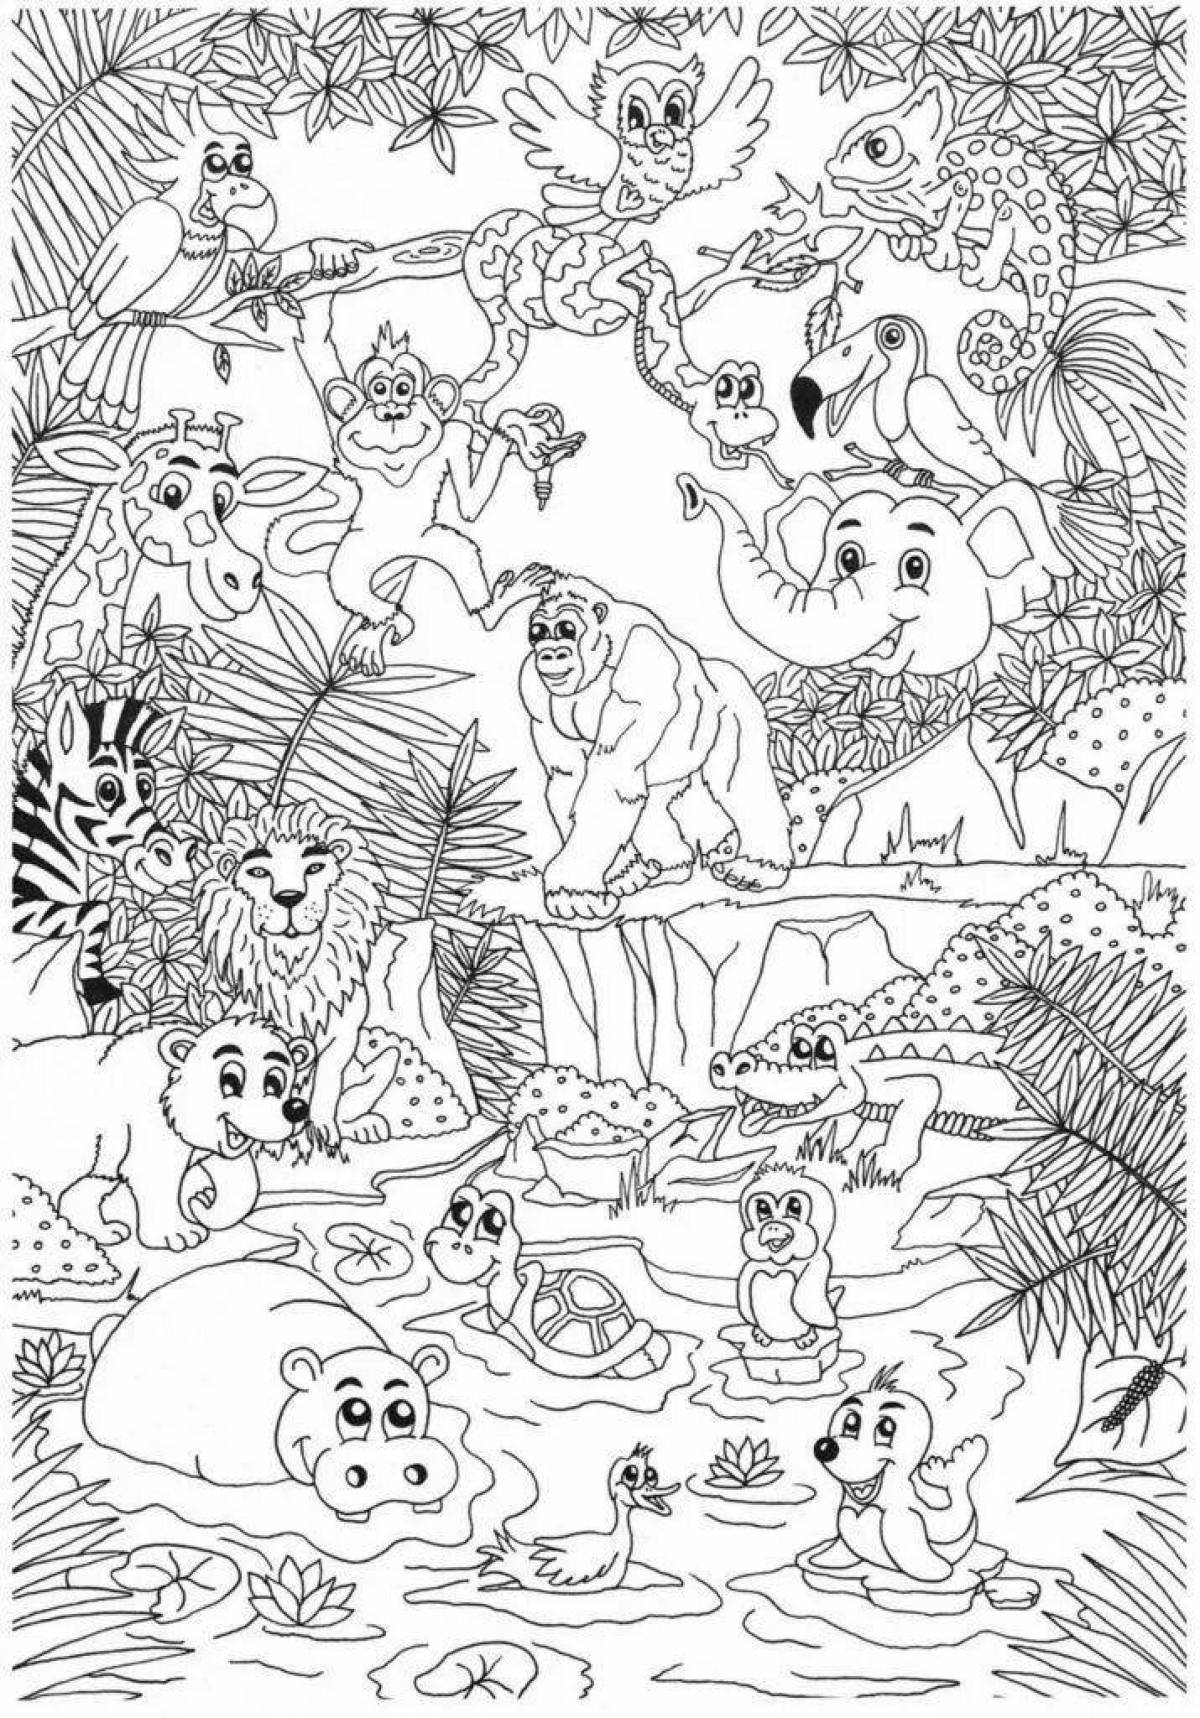 Adorable jungle animals coloring book